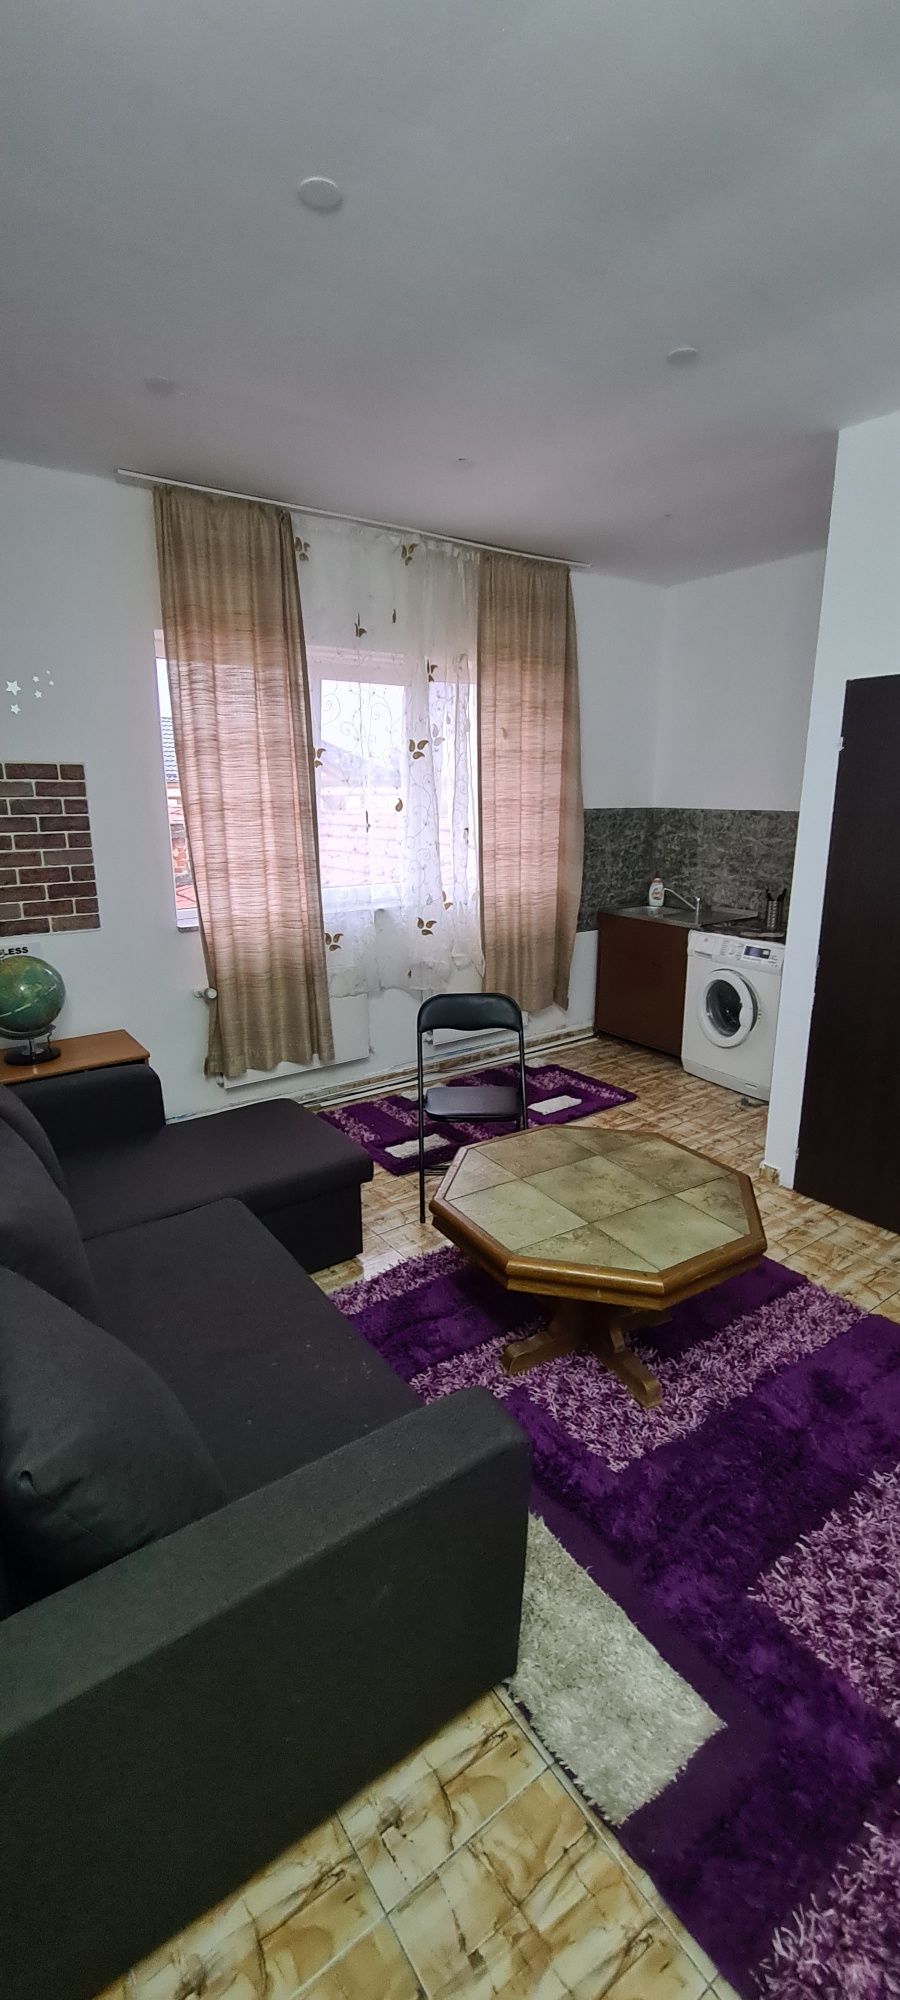 închiriez apartament în regim Hotelier zona Aradul nou